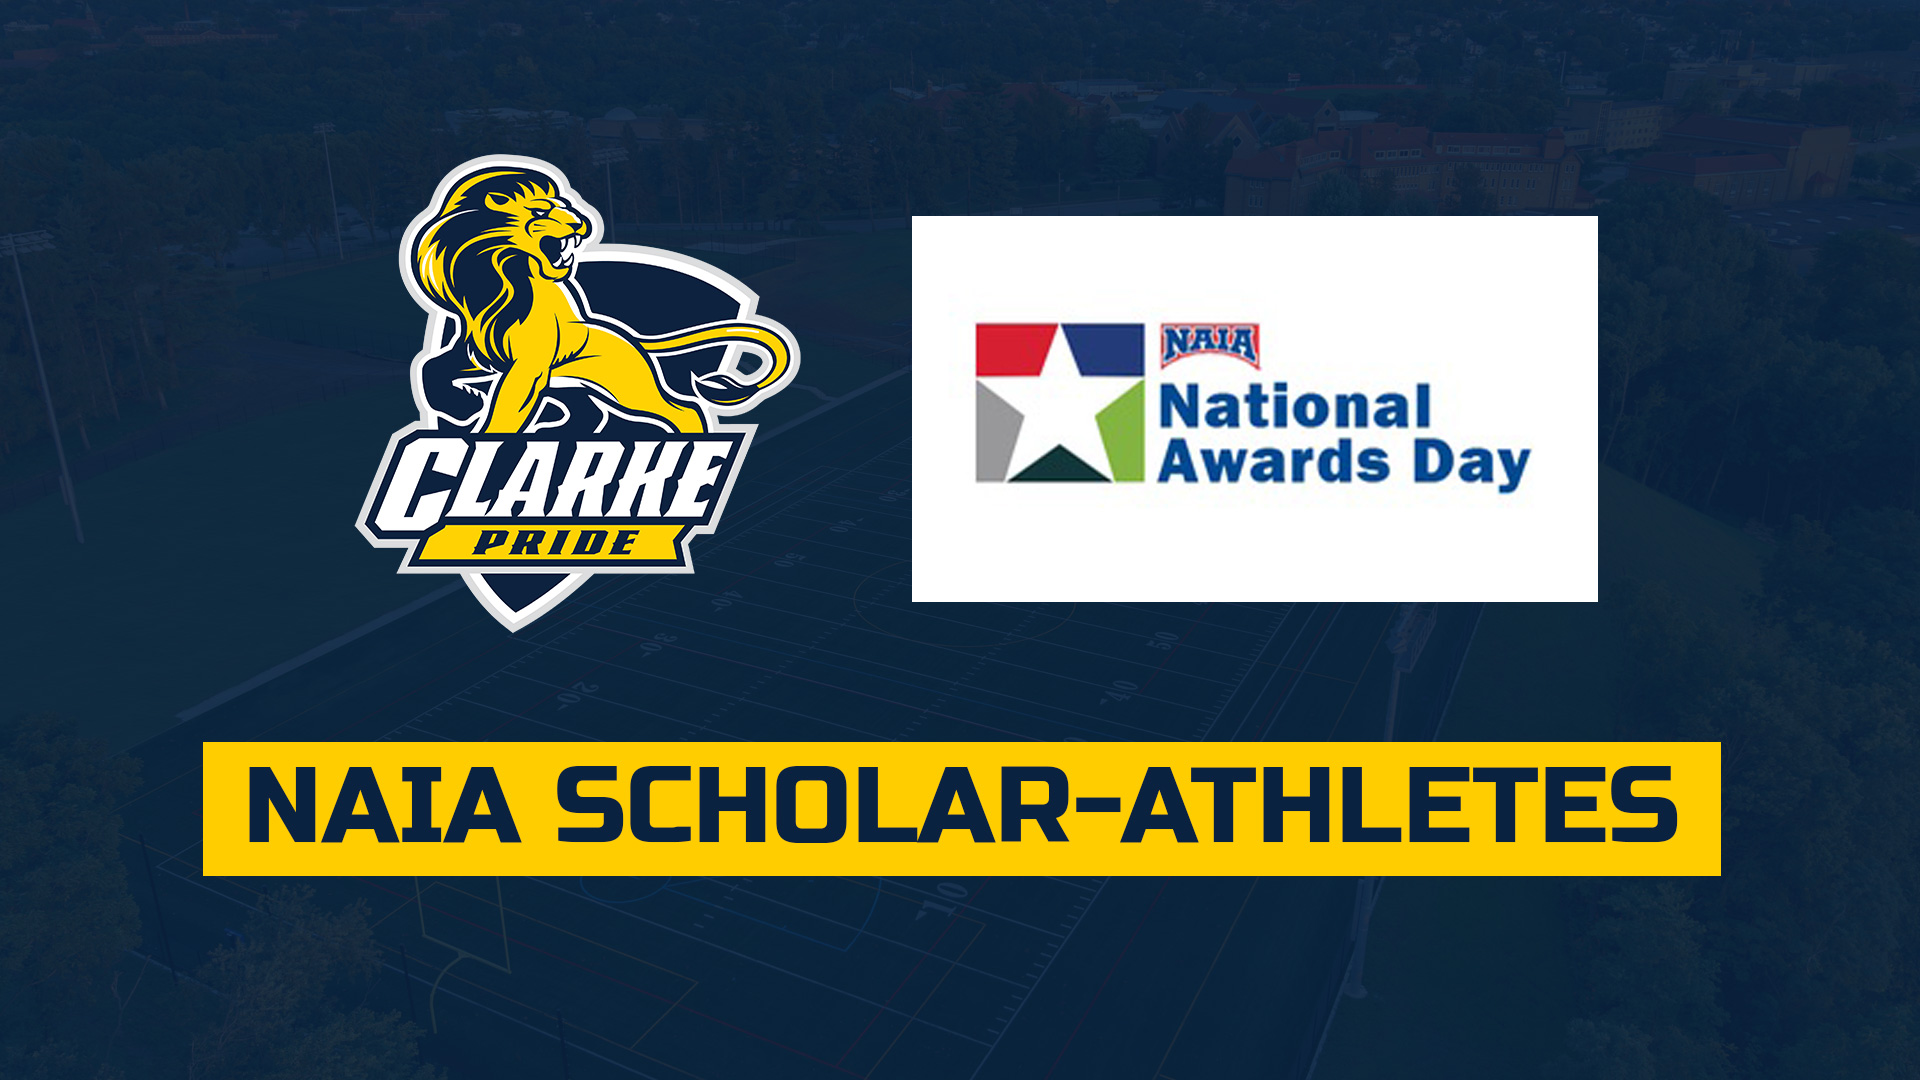 Clarke Pride Logo
NAIA National Awards Day
NAIA Scholar-Athletes